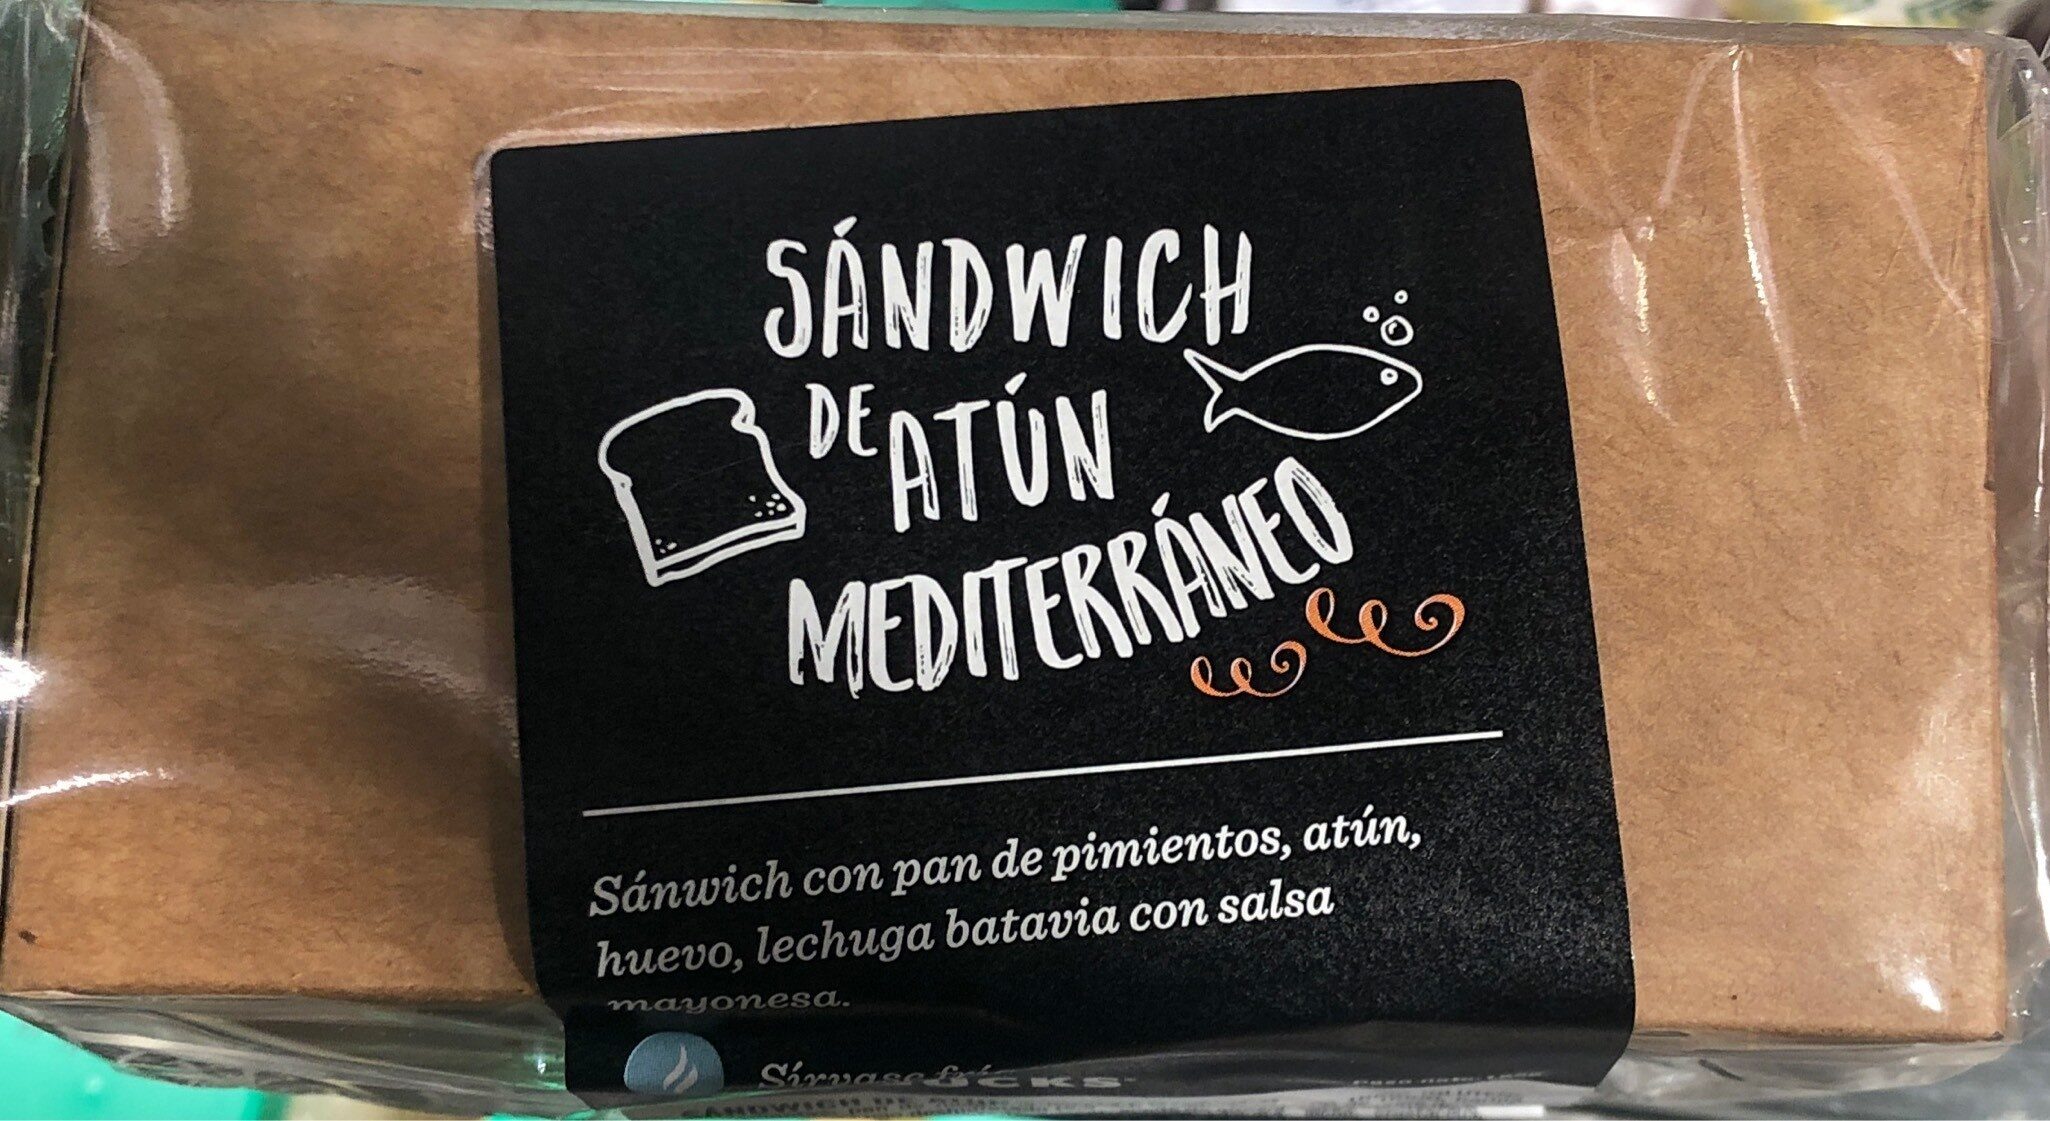 Sandwich de Atun mediterraneo - Produit